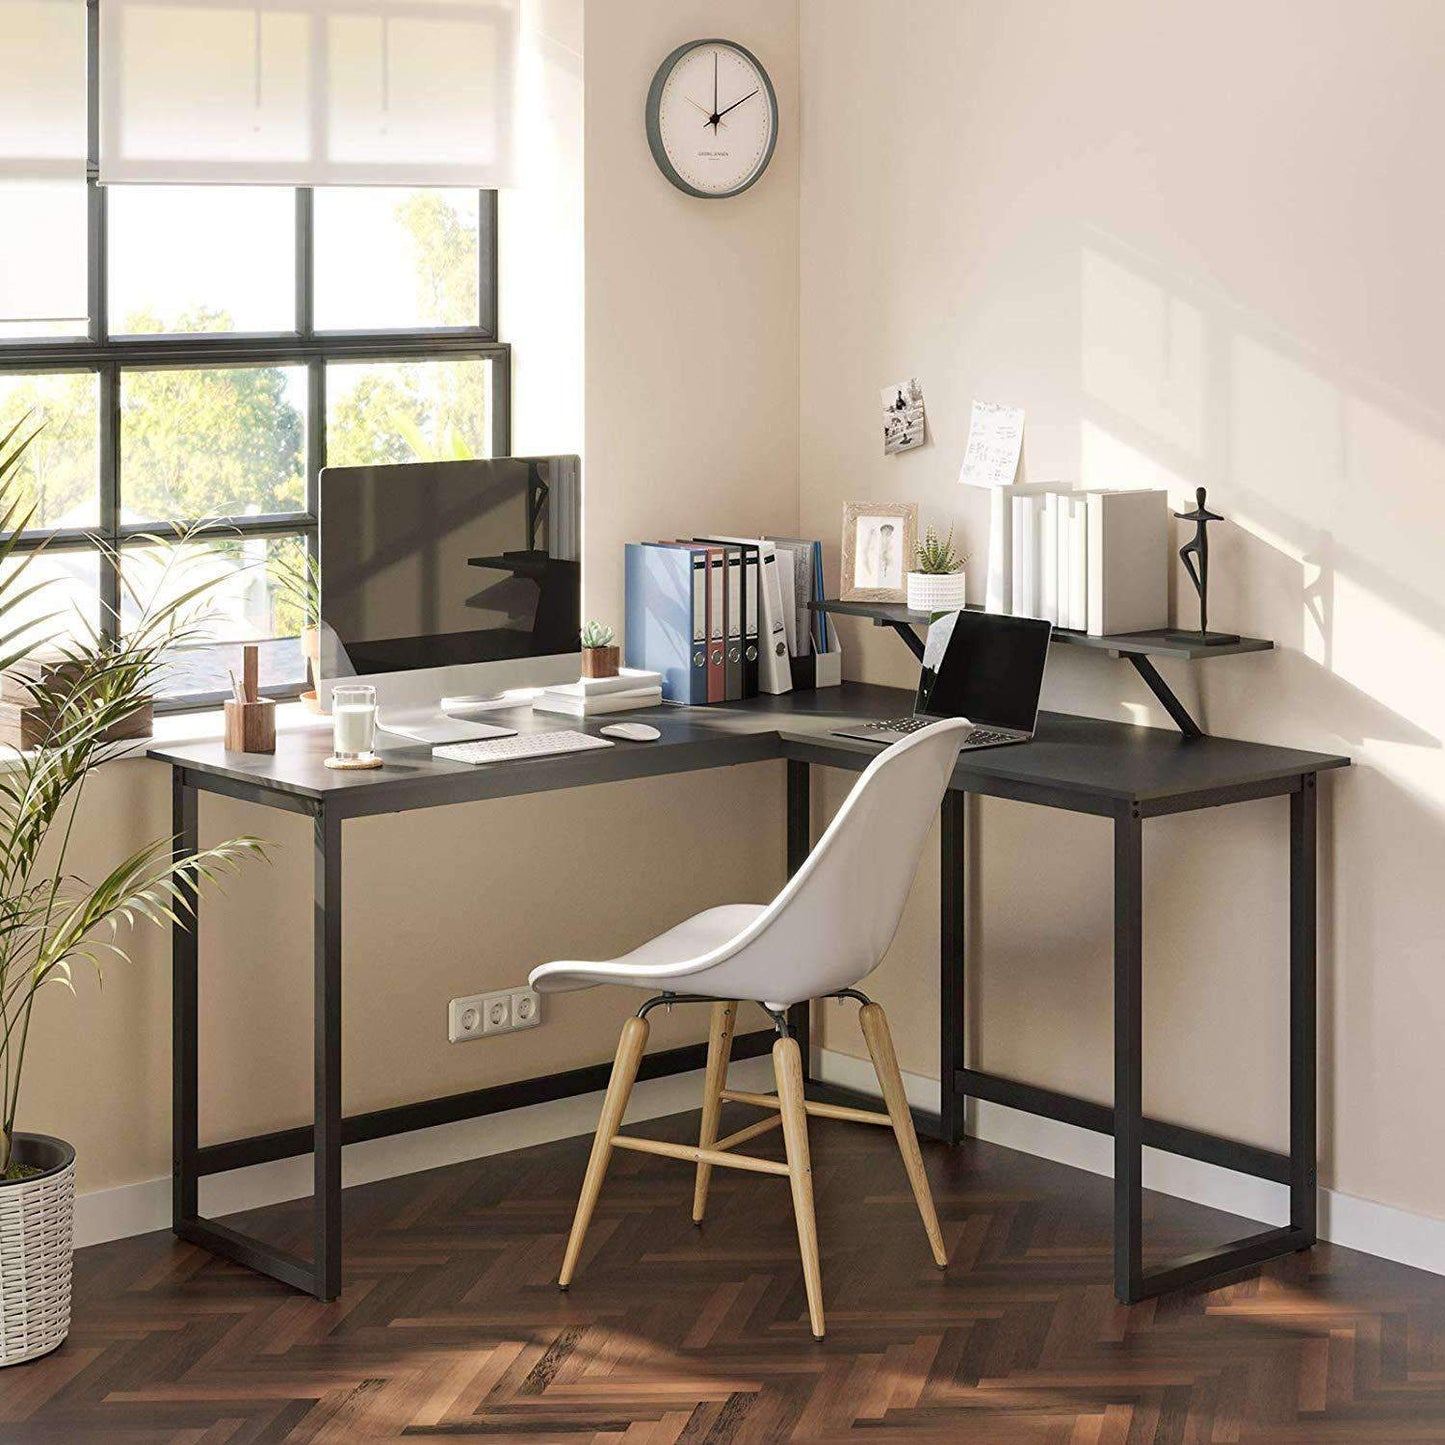 Nancy's Henderson Desk - Desks - Corner desk - L-Shaped - Industrial - Wood and Metal - Black - 140 x 130 x 76cm